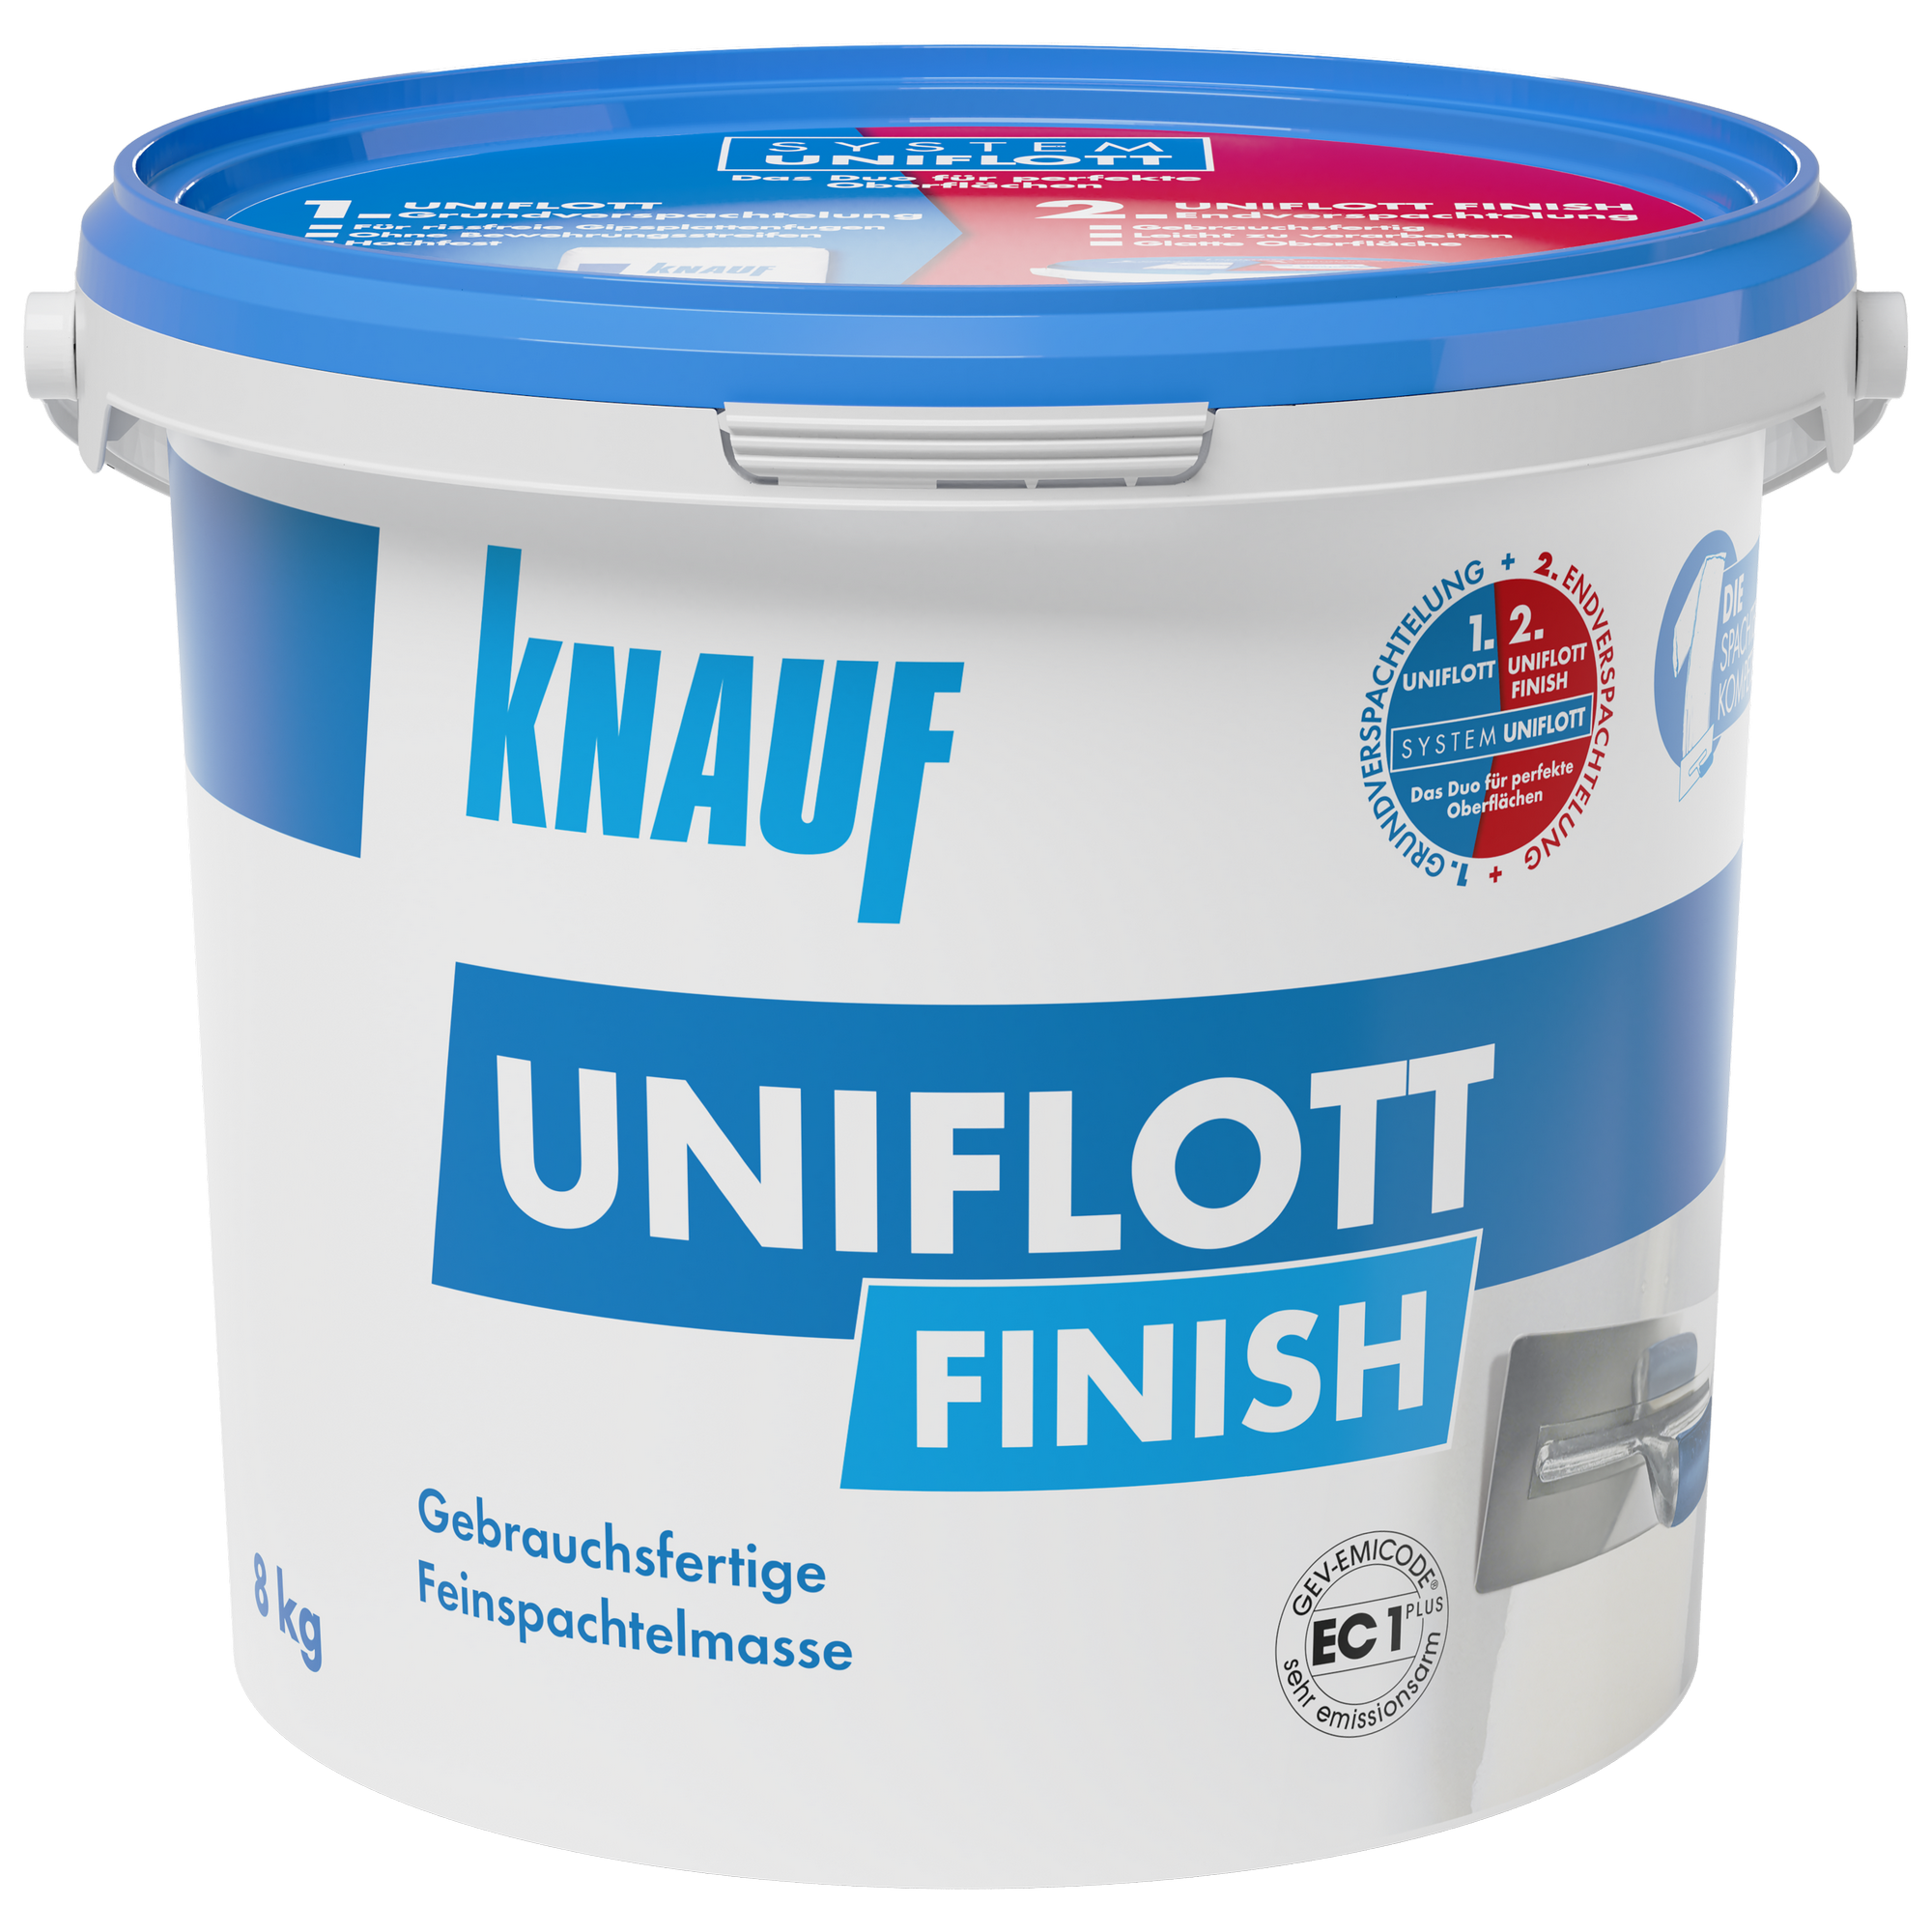 Feinspachtelmasse 'Uniflott Finish' 8 kg + product picture